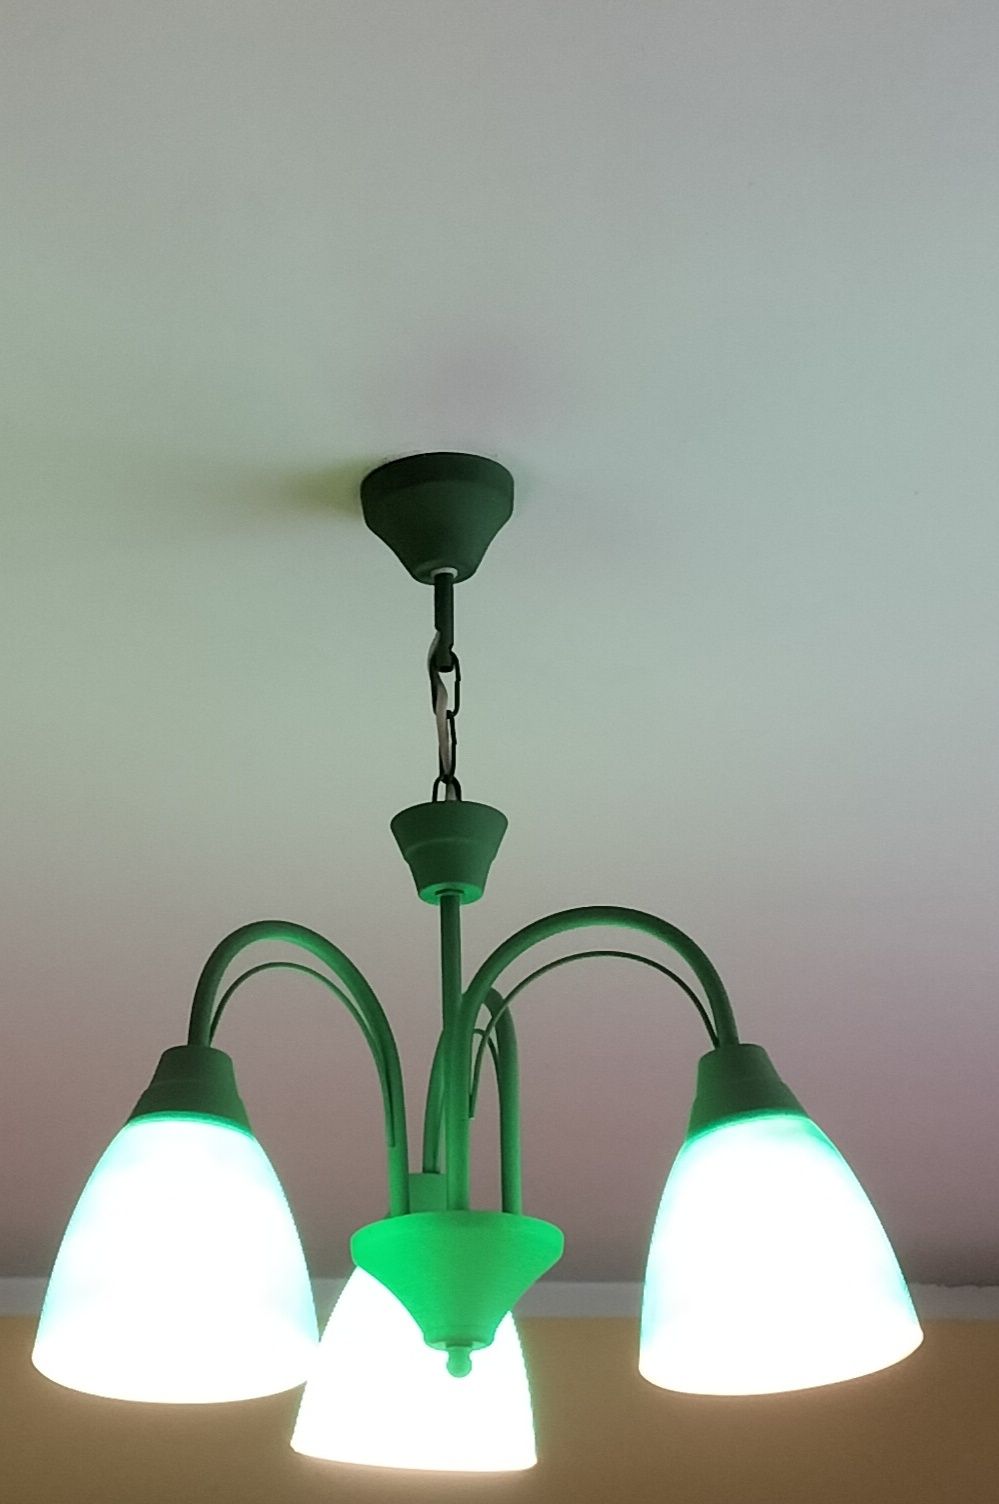 Lampa lampka żyrandol zielona zielony